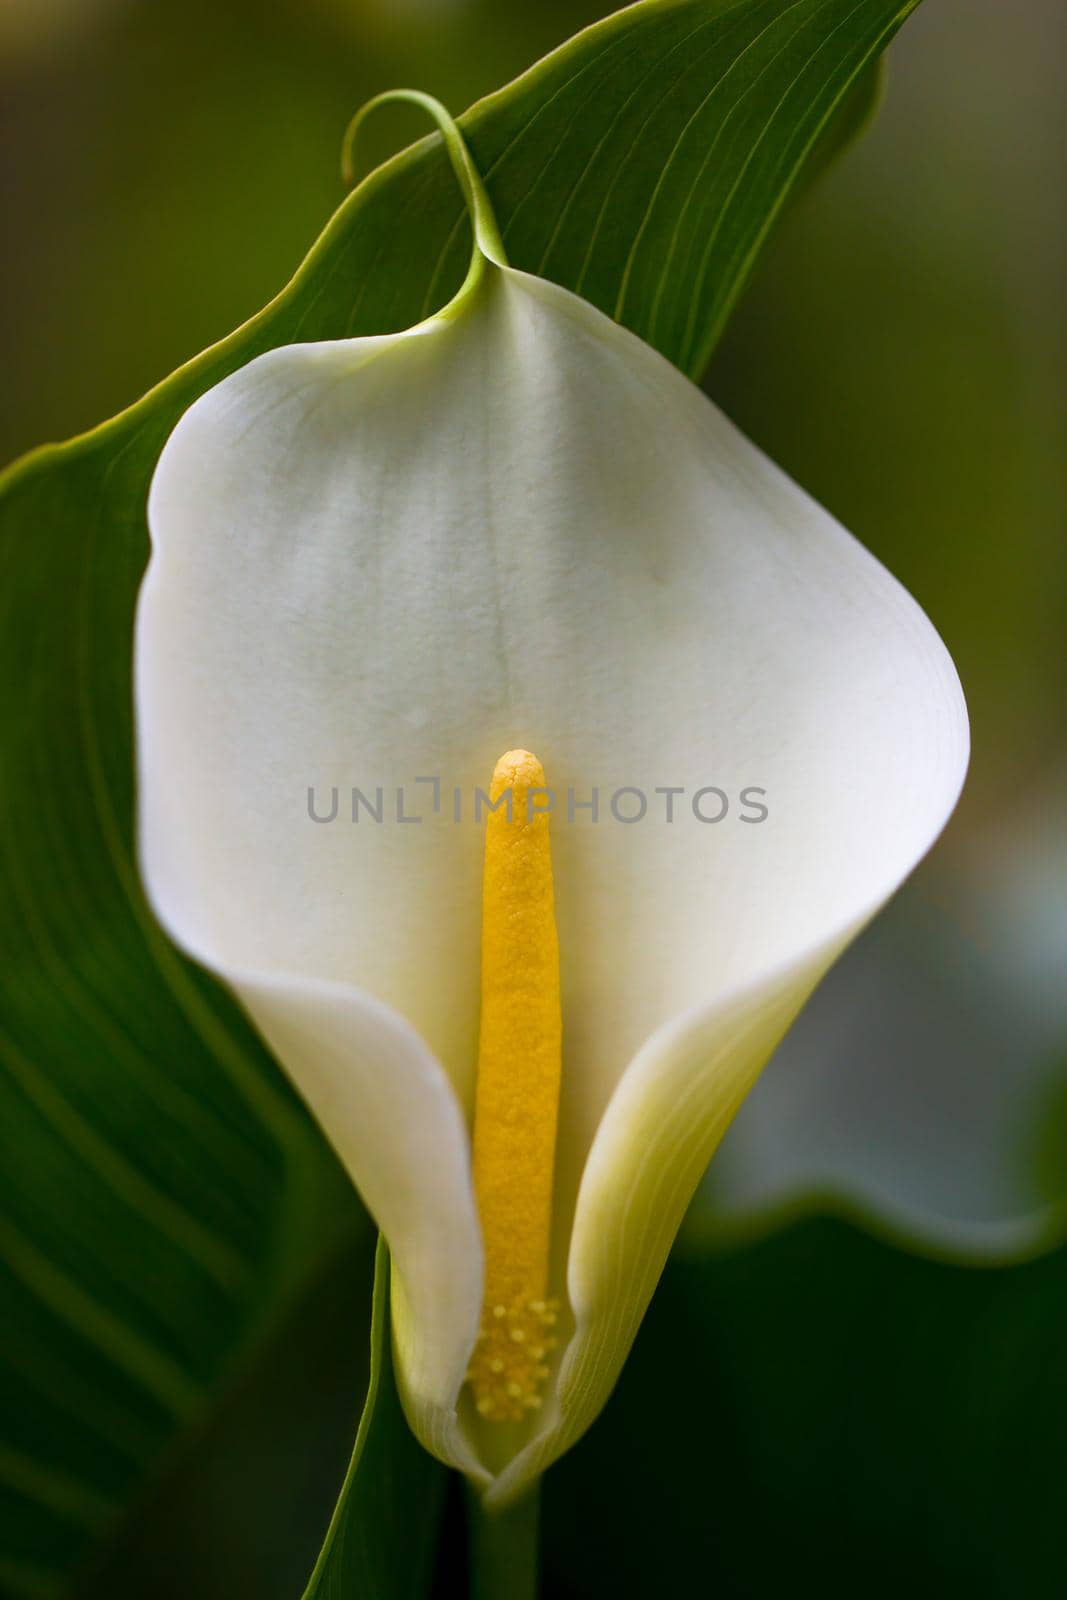 A single elegant lily blossom, zantedeschia aethiopica, delicately curved